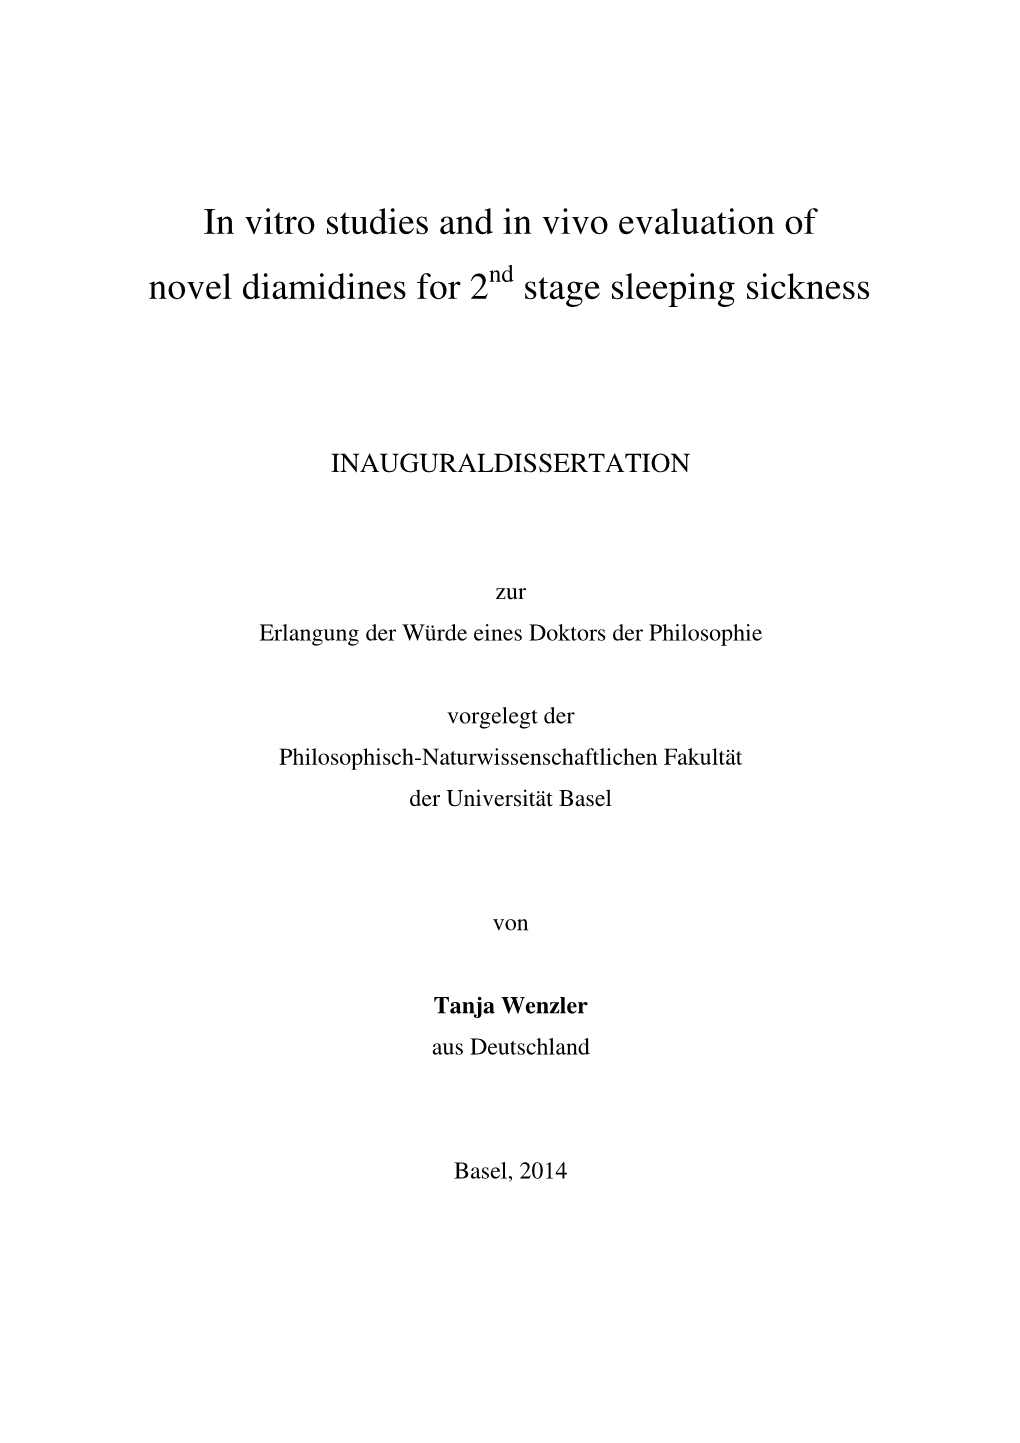 In Vitro Studies and in Vivo Evaluation of Novel Diamidines for 2 Stage Sleeping Sickness